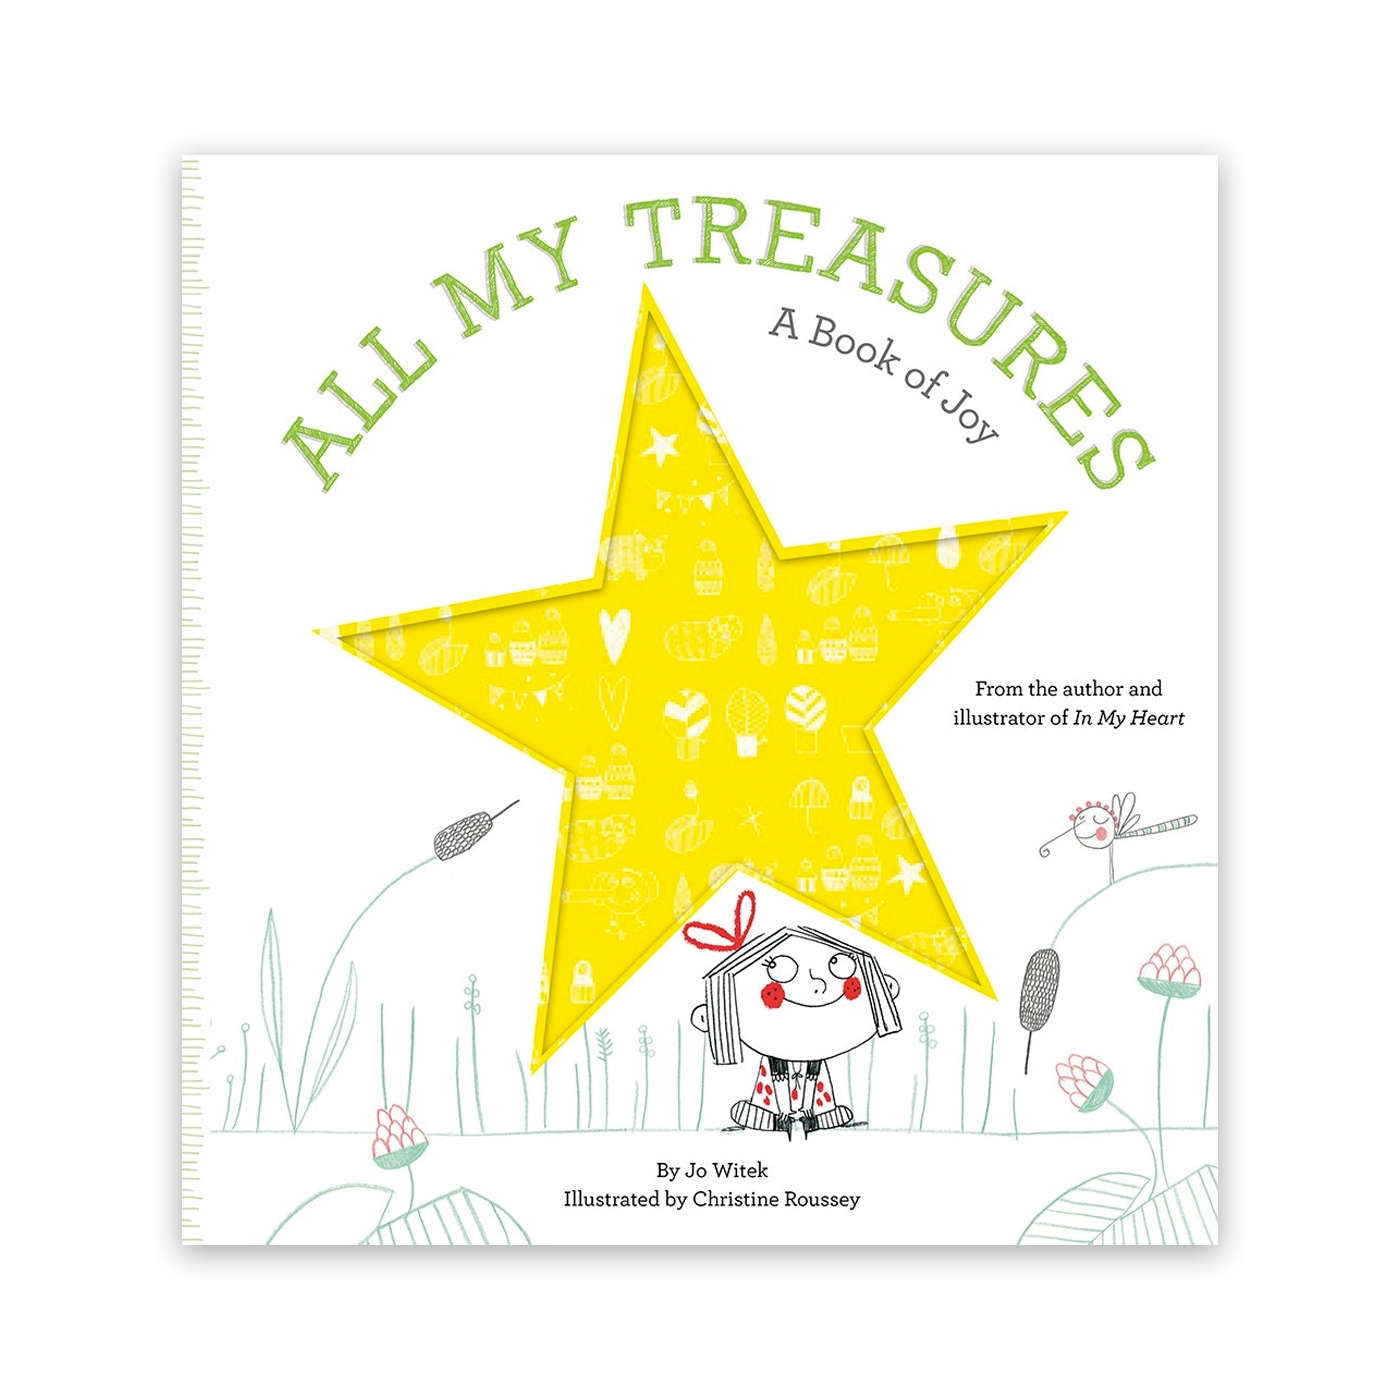  All My Treasures: A Book of Joy